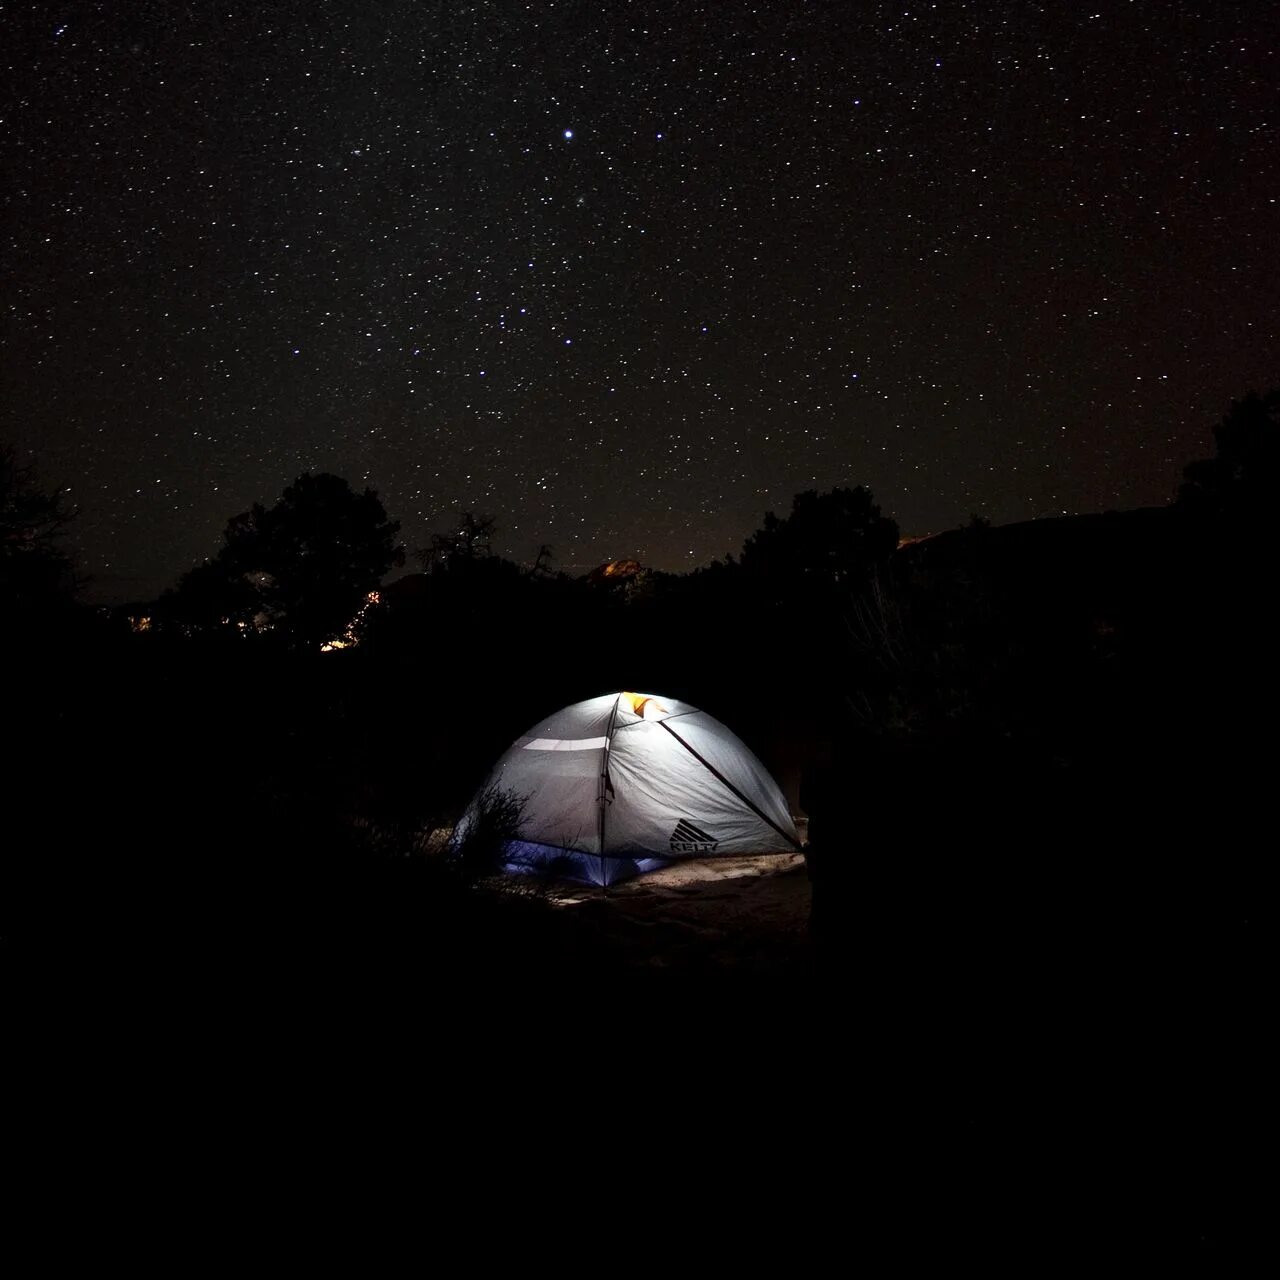 Sky camping. Палатка ночью. Звездное небо и палатка. Обои палатка. Палатка в темноте.